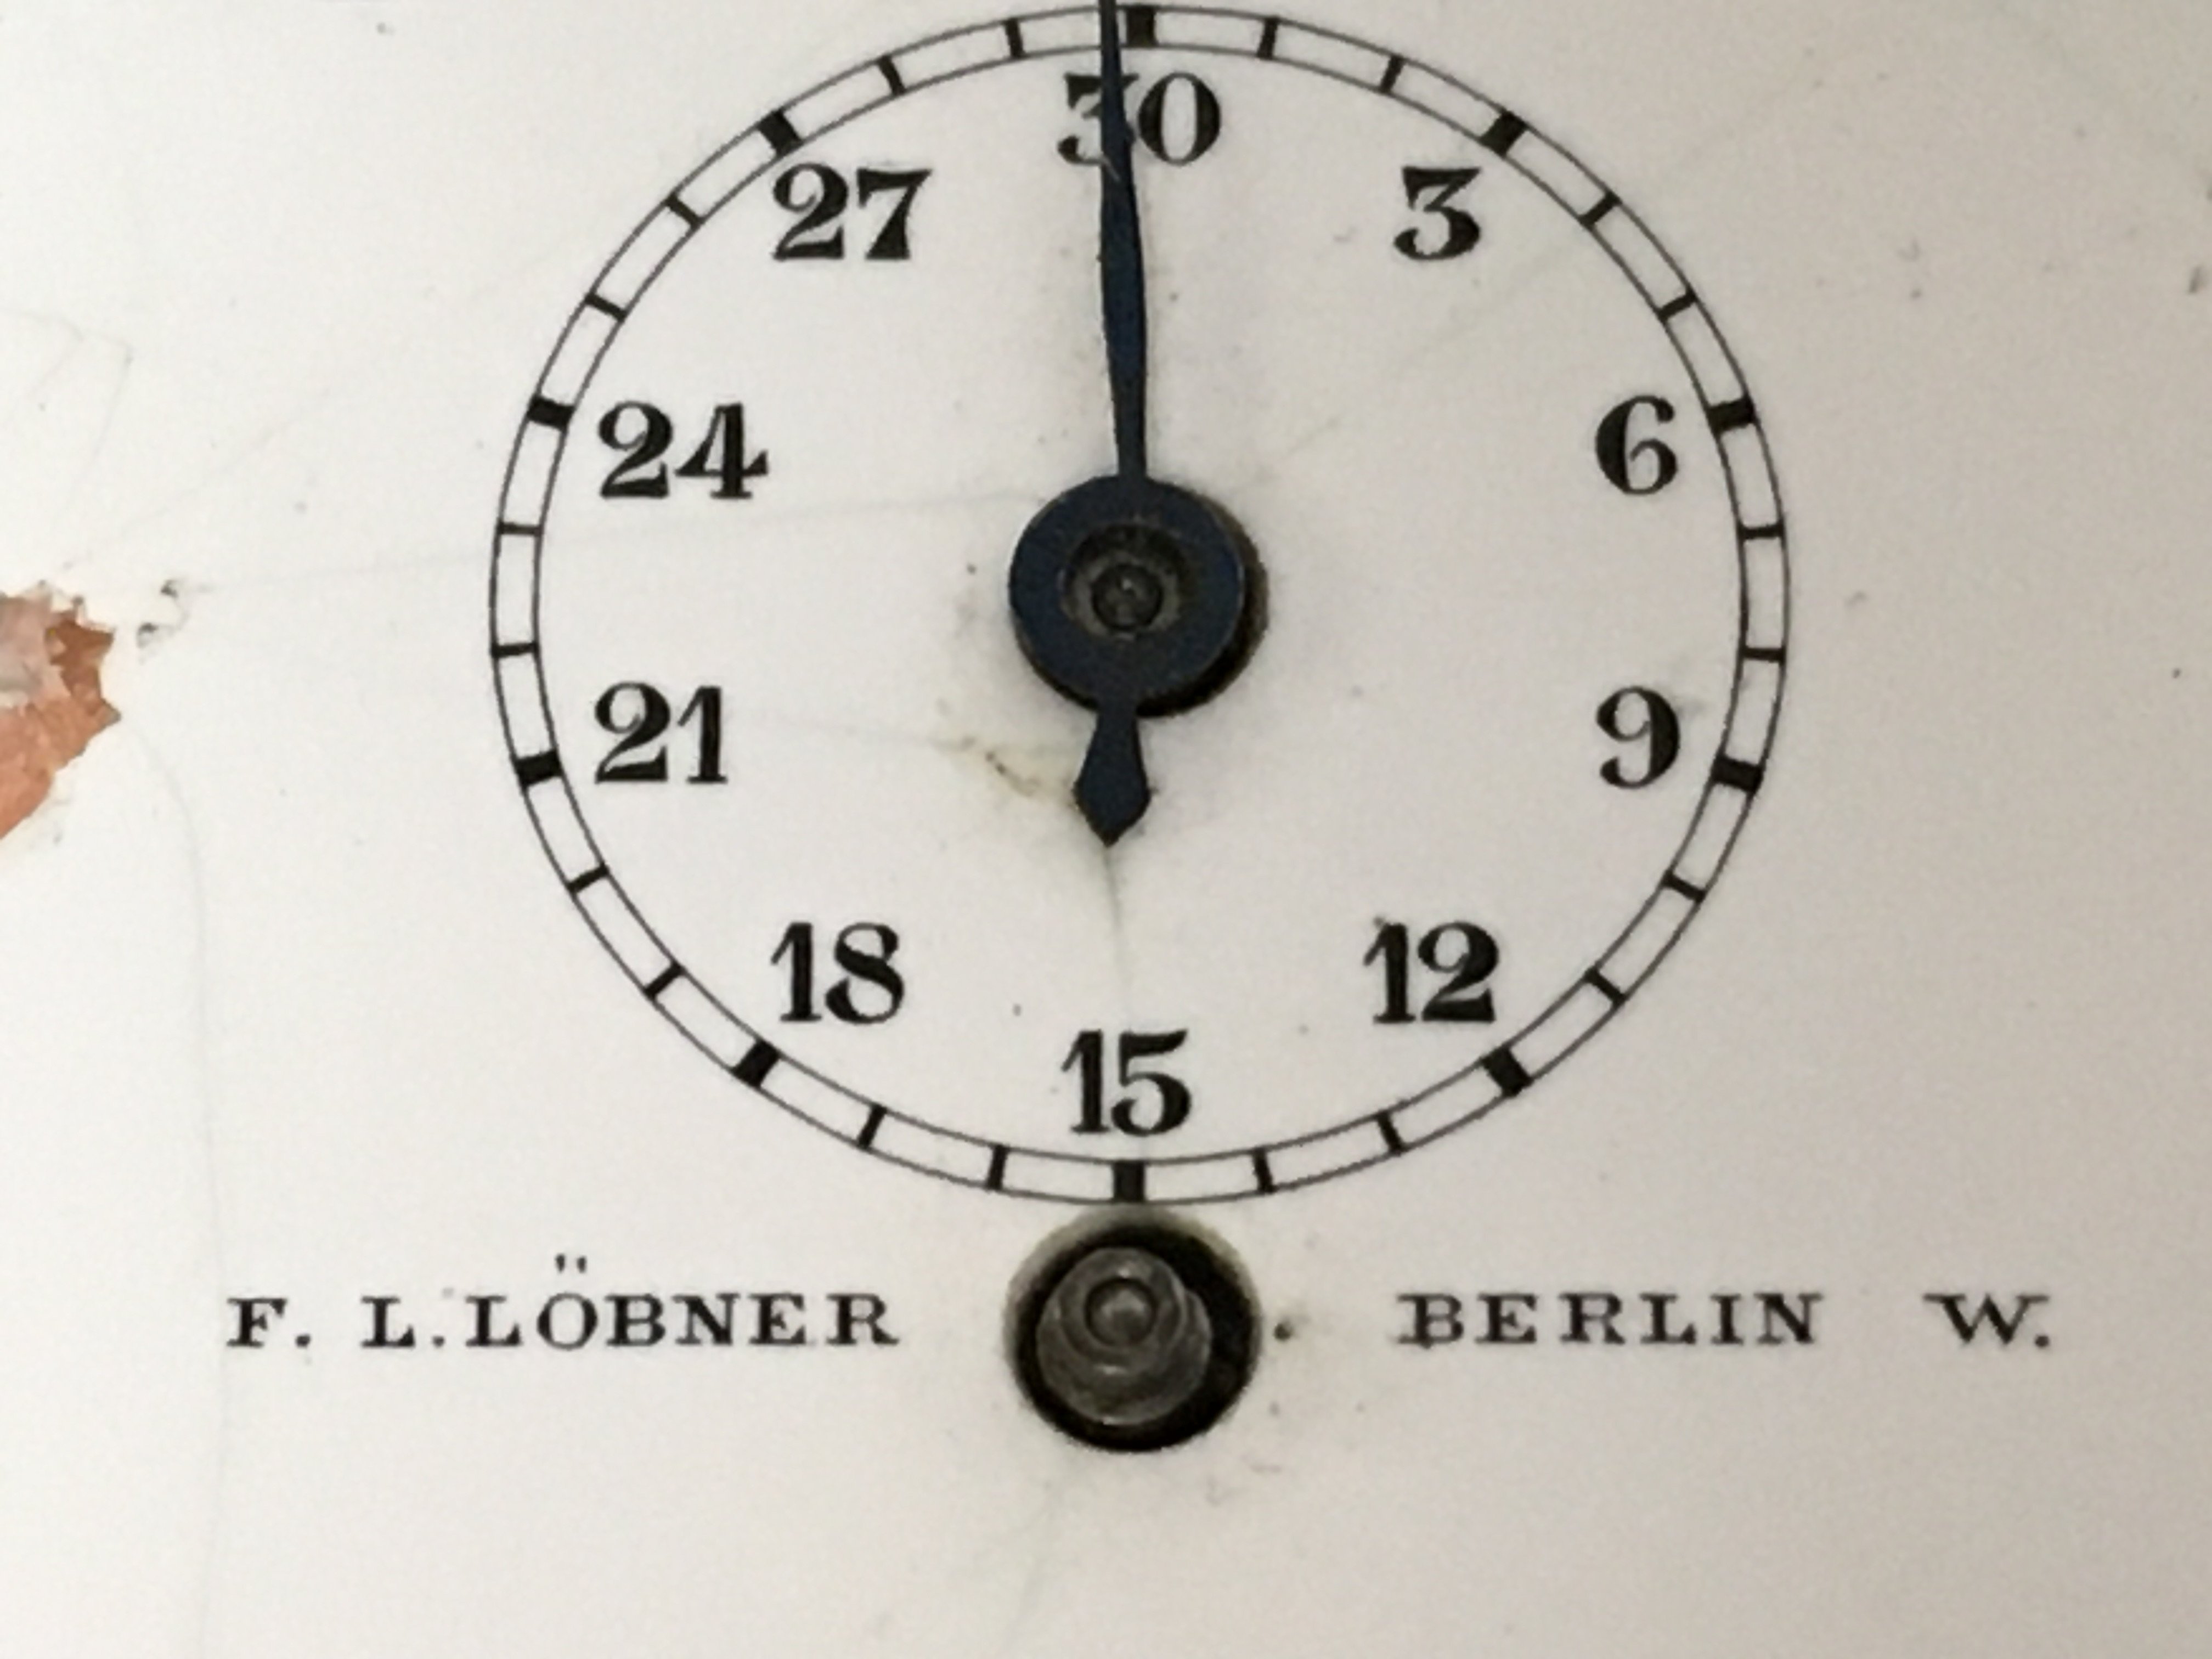 A German Military stop watch, F.L. LOBNER BERLIN. - Image 2 of 3